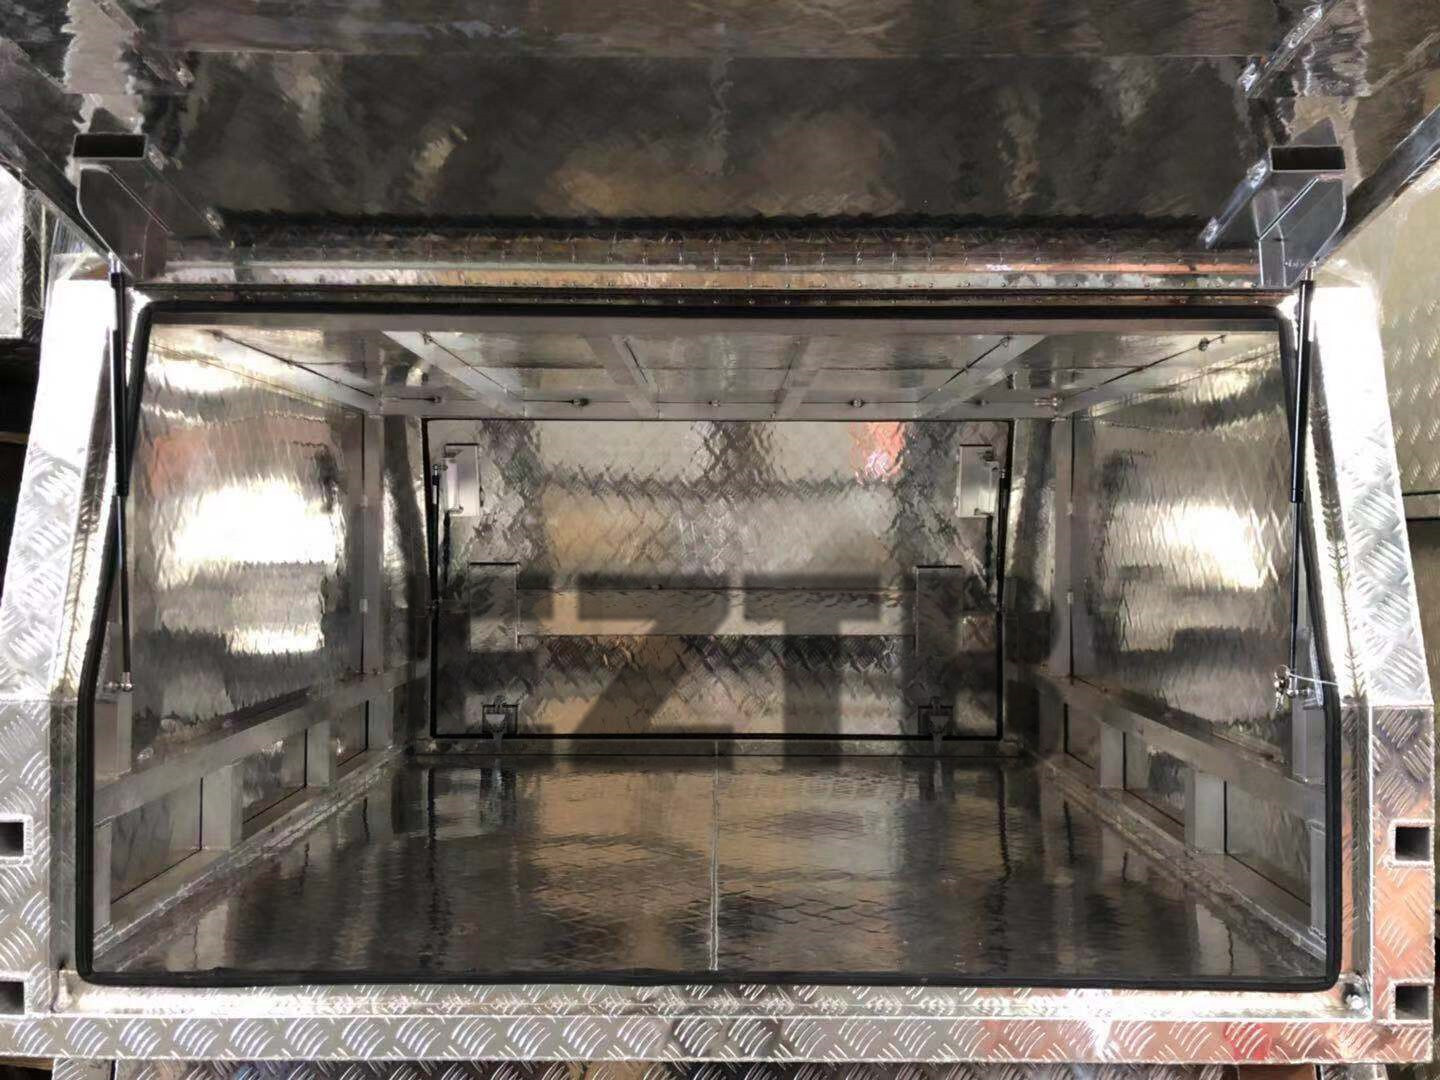 1800mm x 1000mm High Checker Plate Aluminium Canopy